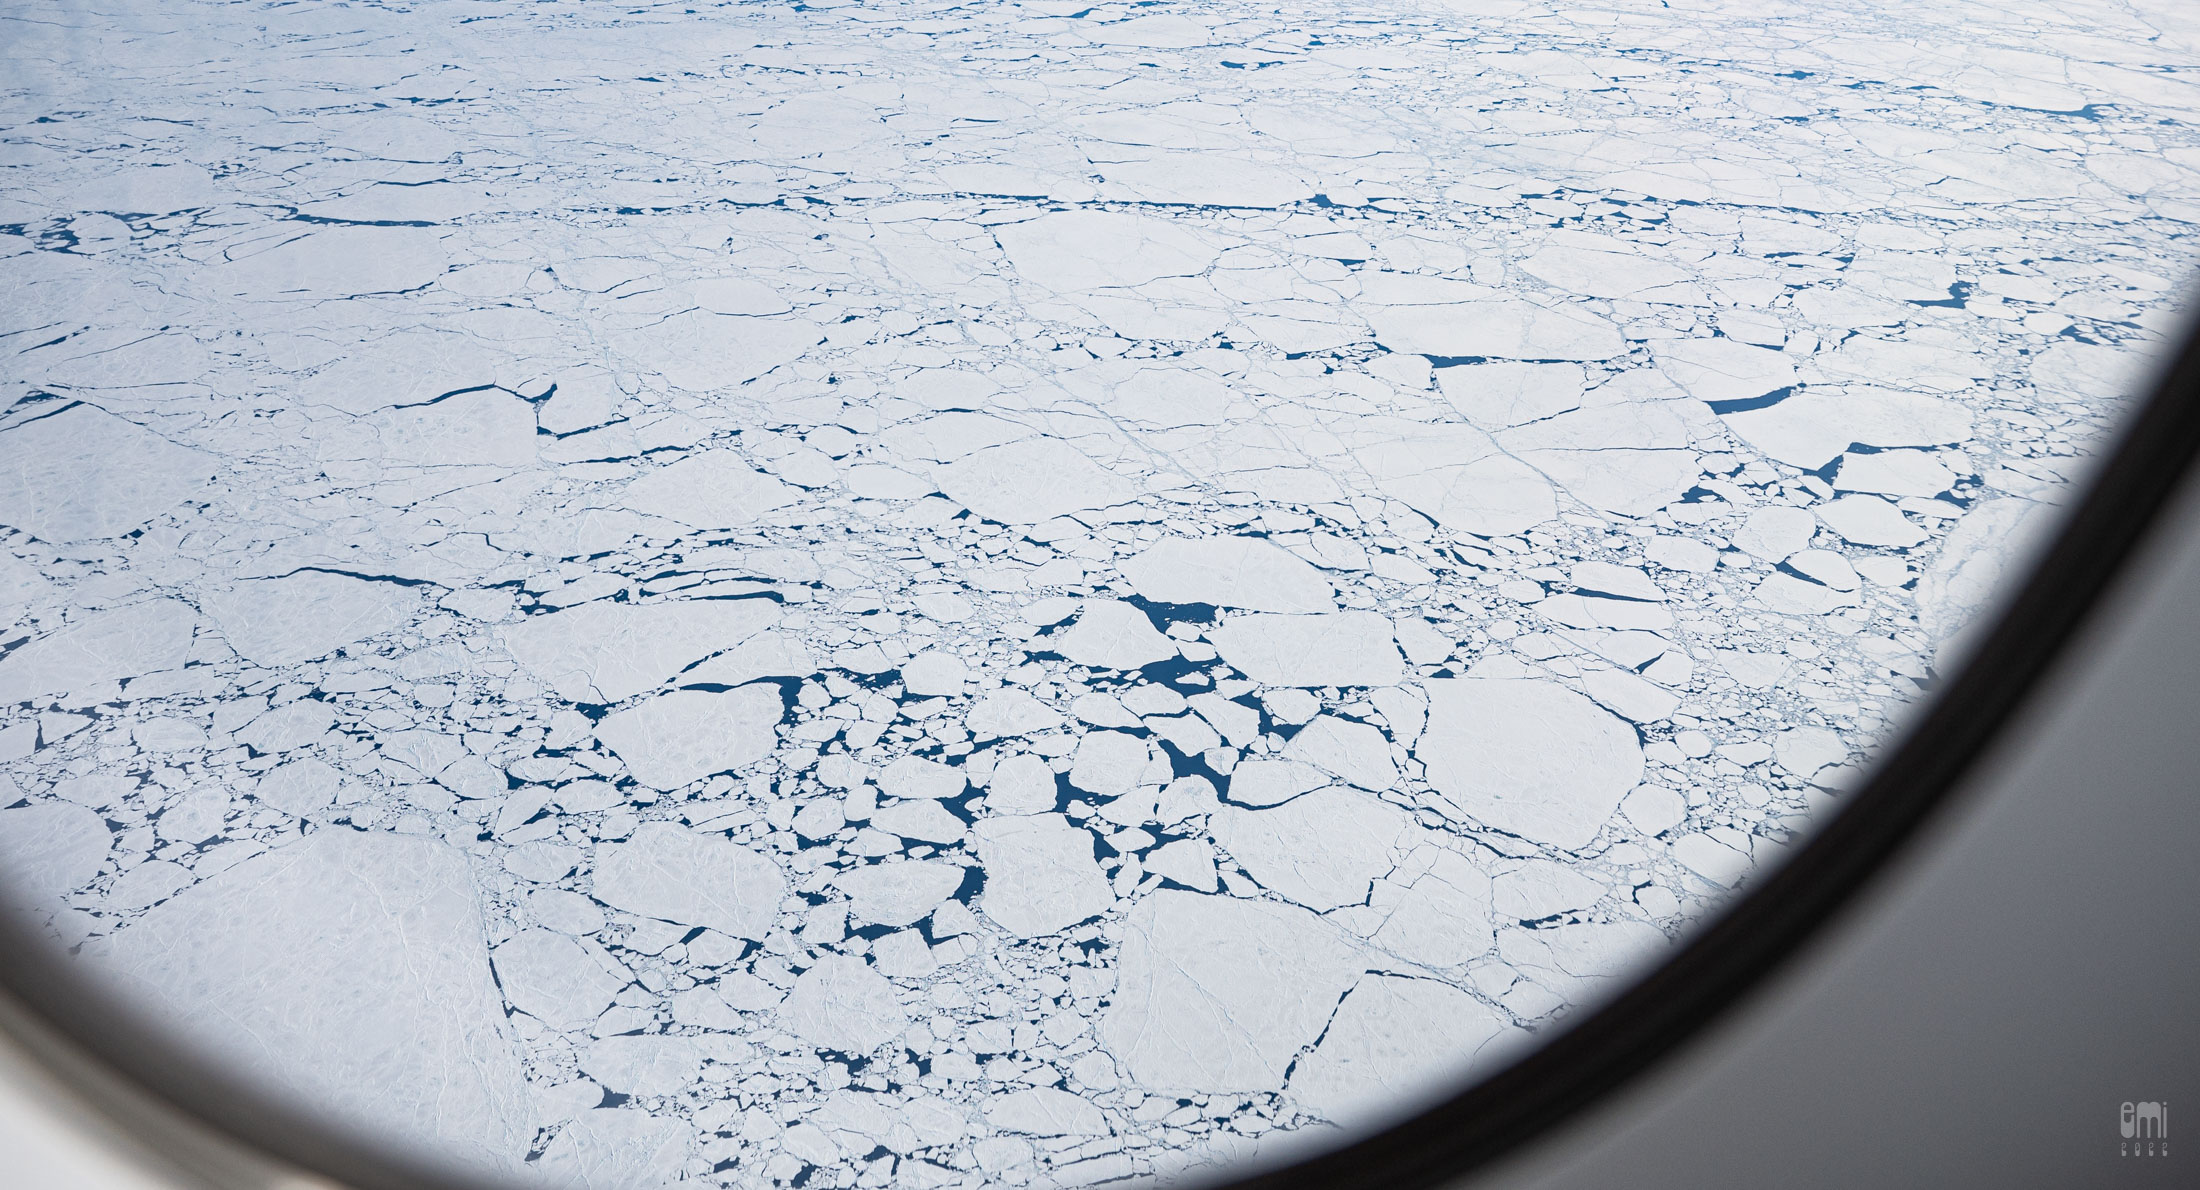 20220628 Arctic Ocean from Finnair emi-9554